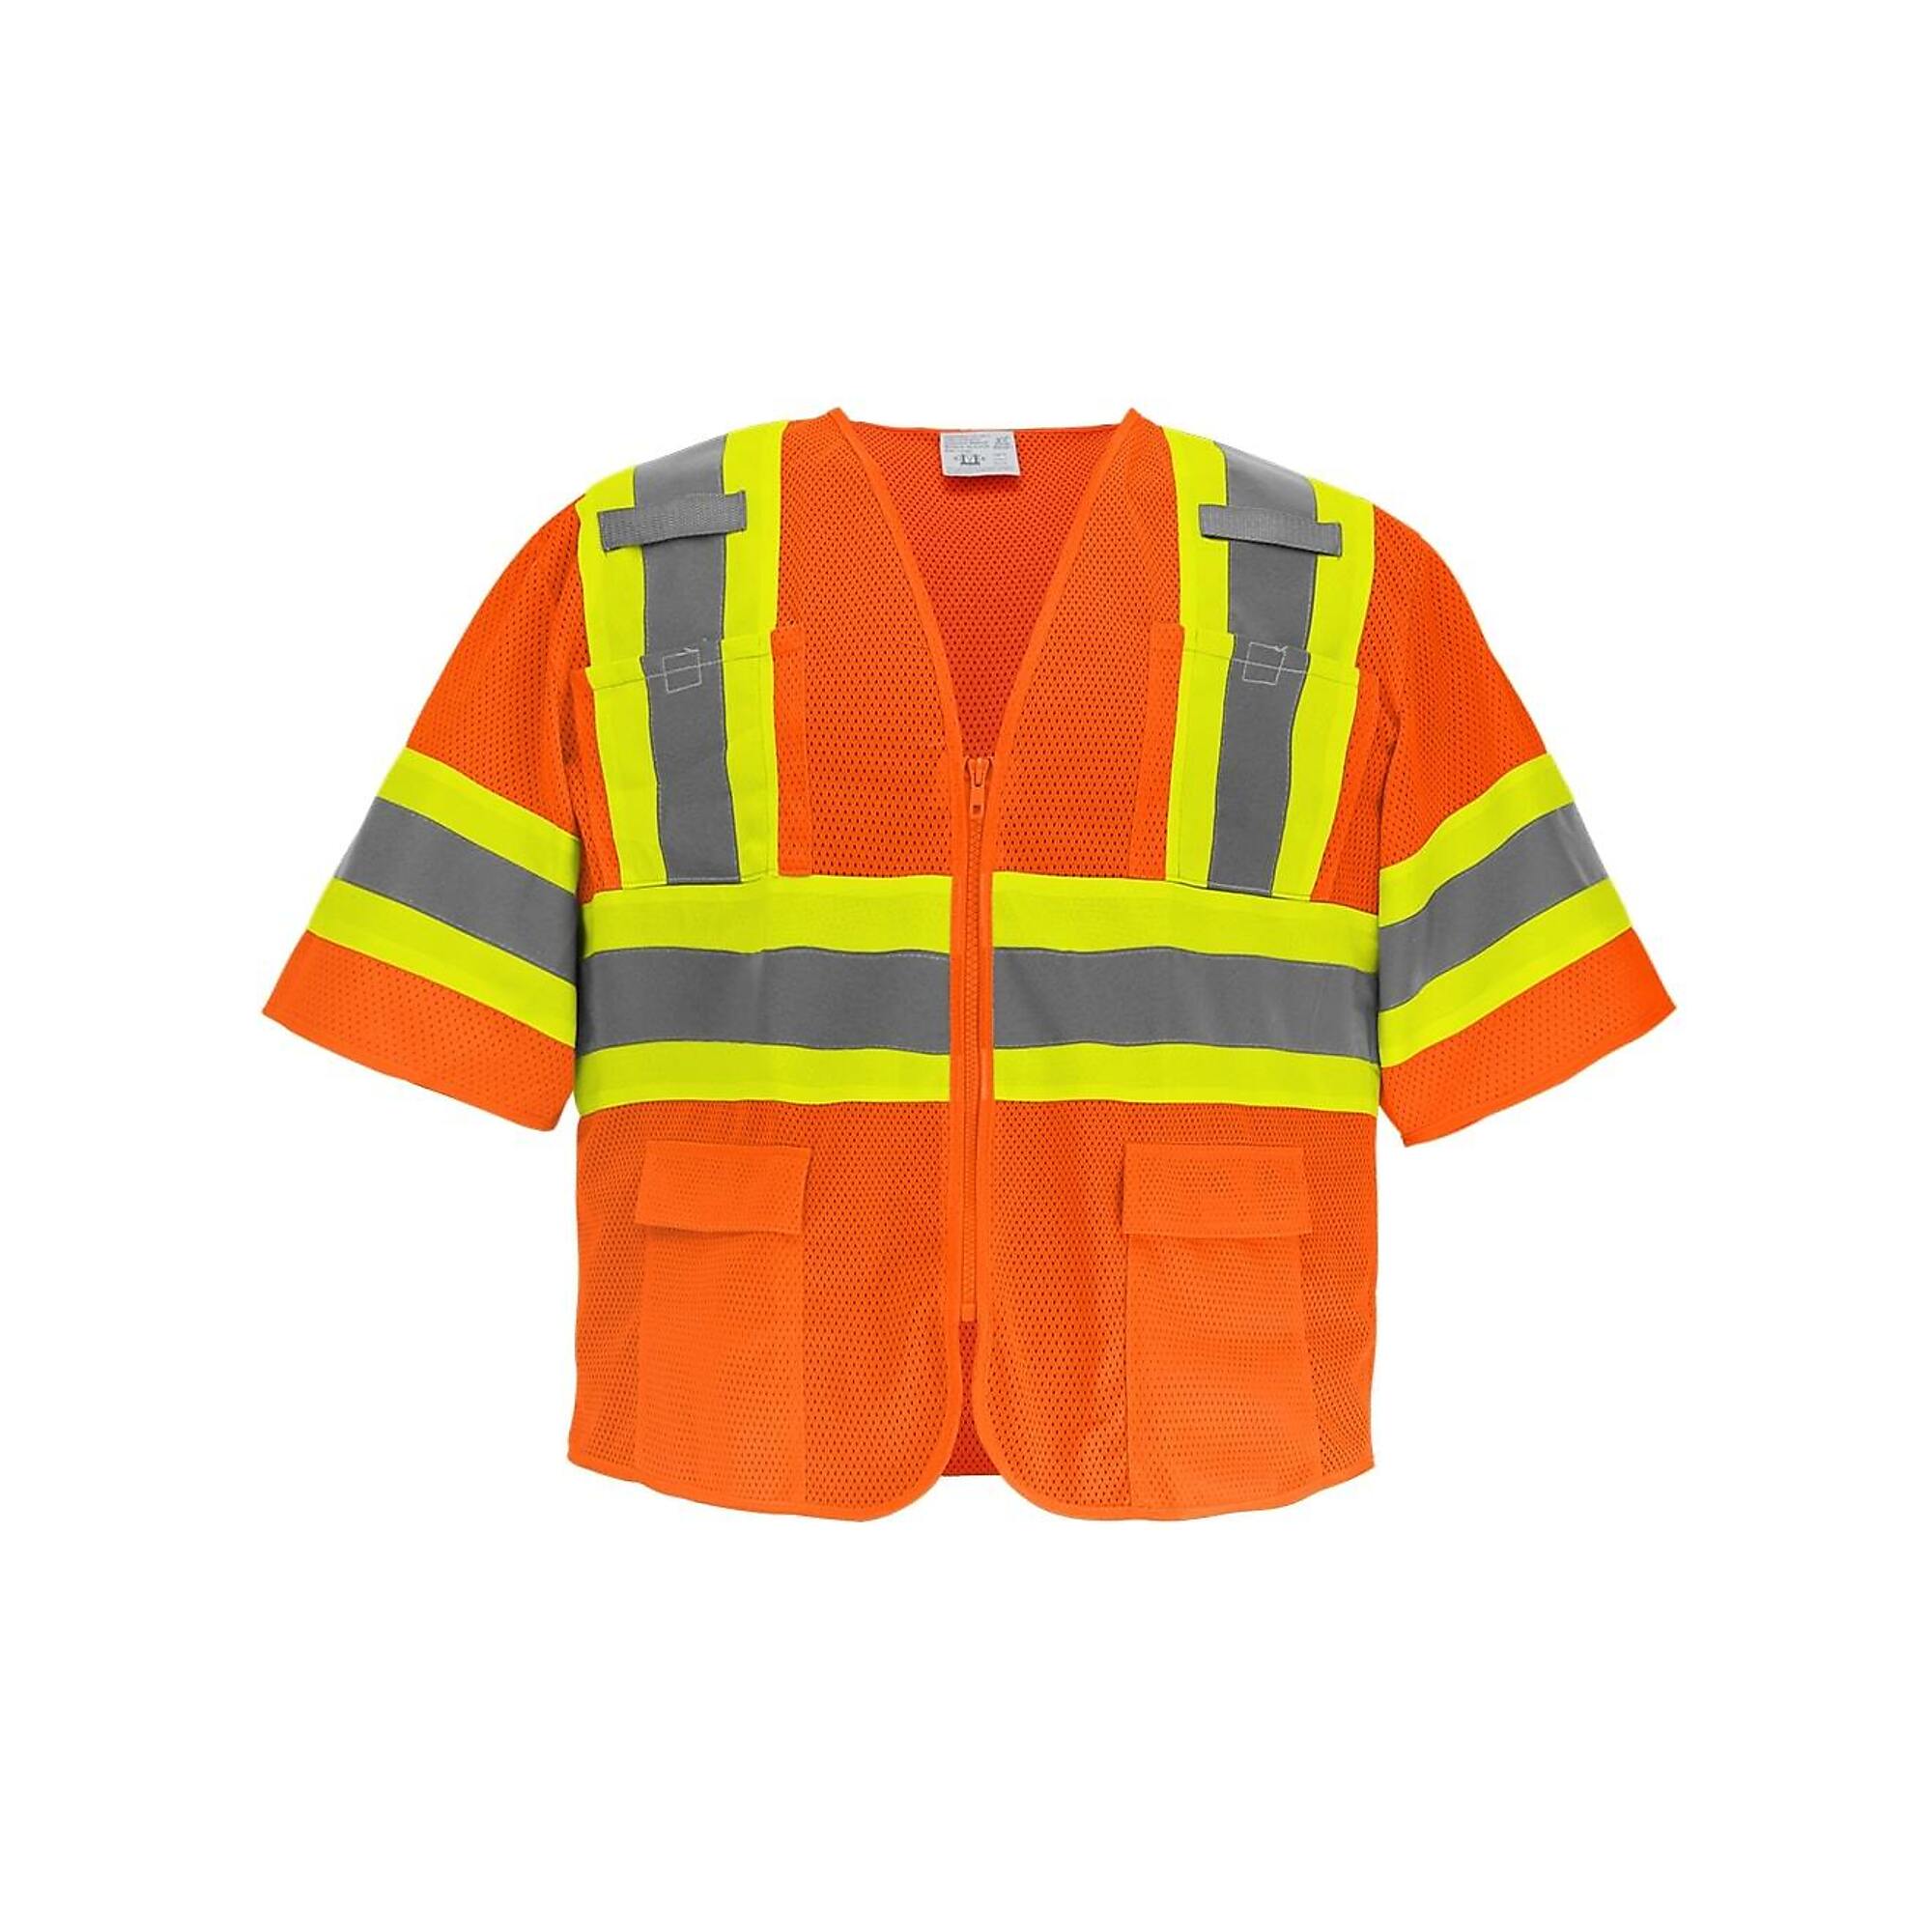 FrogWear, HV Orange, Class 3 6 Pockets, With Sleeves Mesh Vest, Size L, Color High-Visibility Orange, Model GLO-0145-L